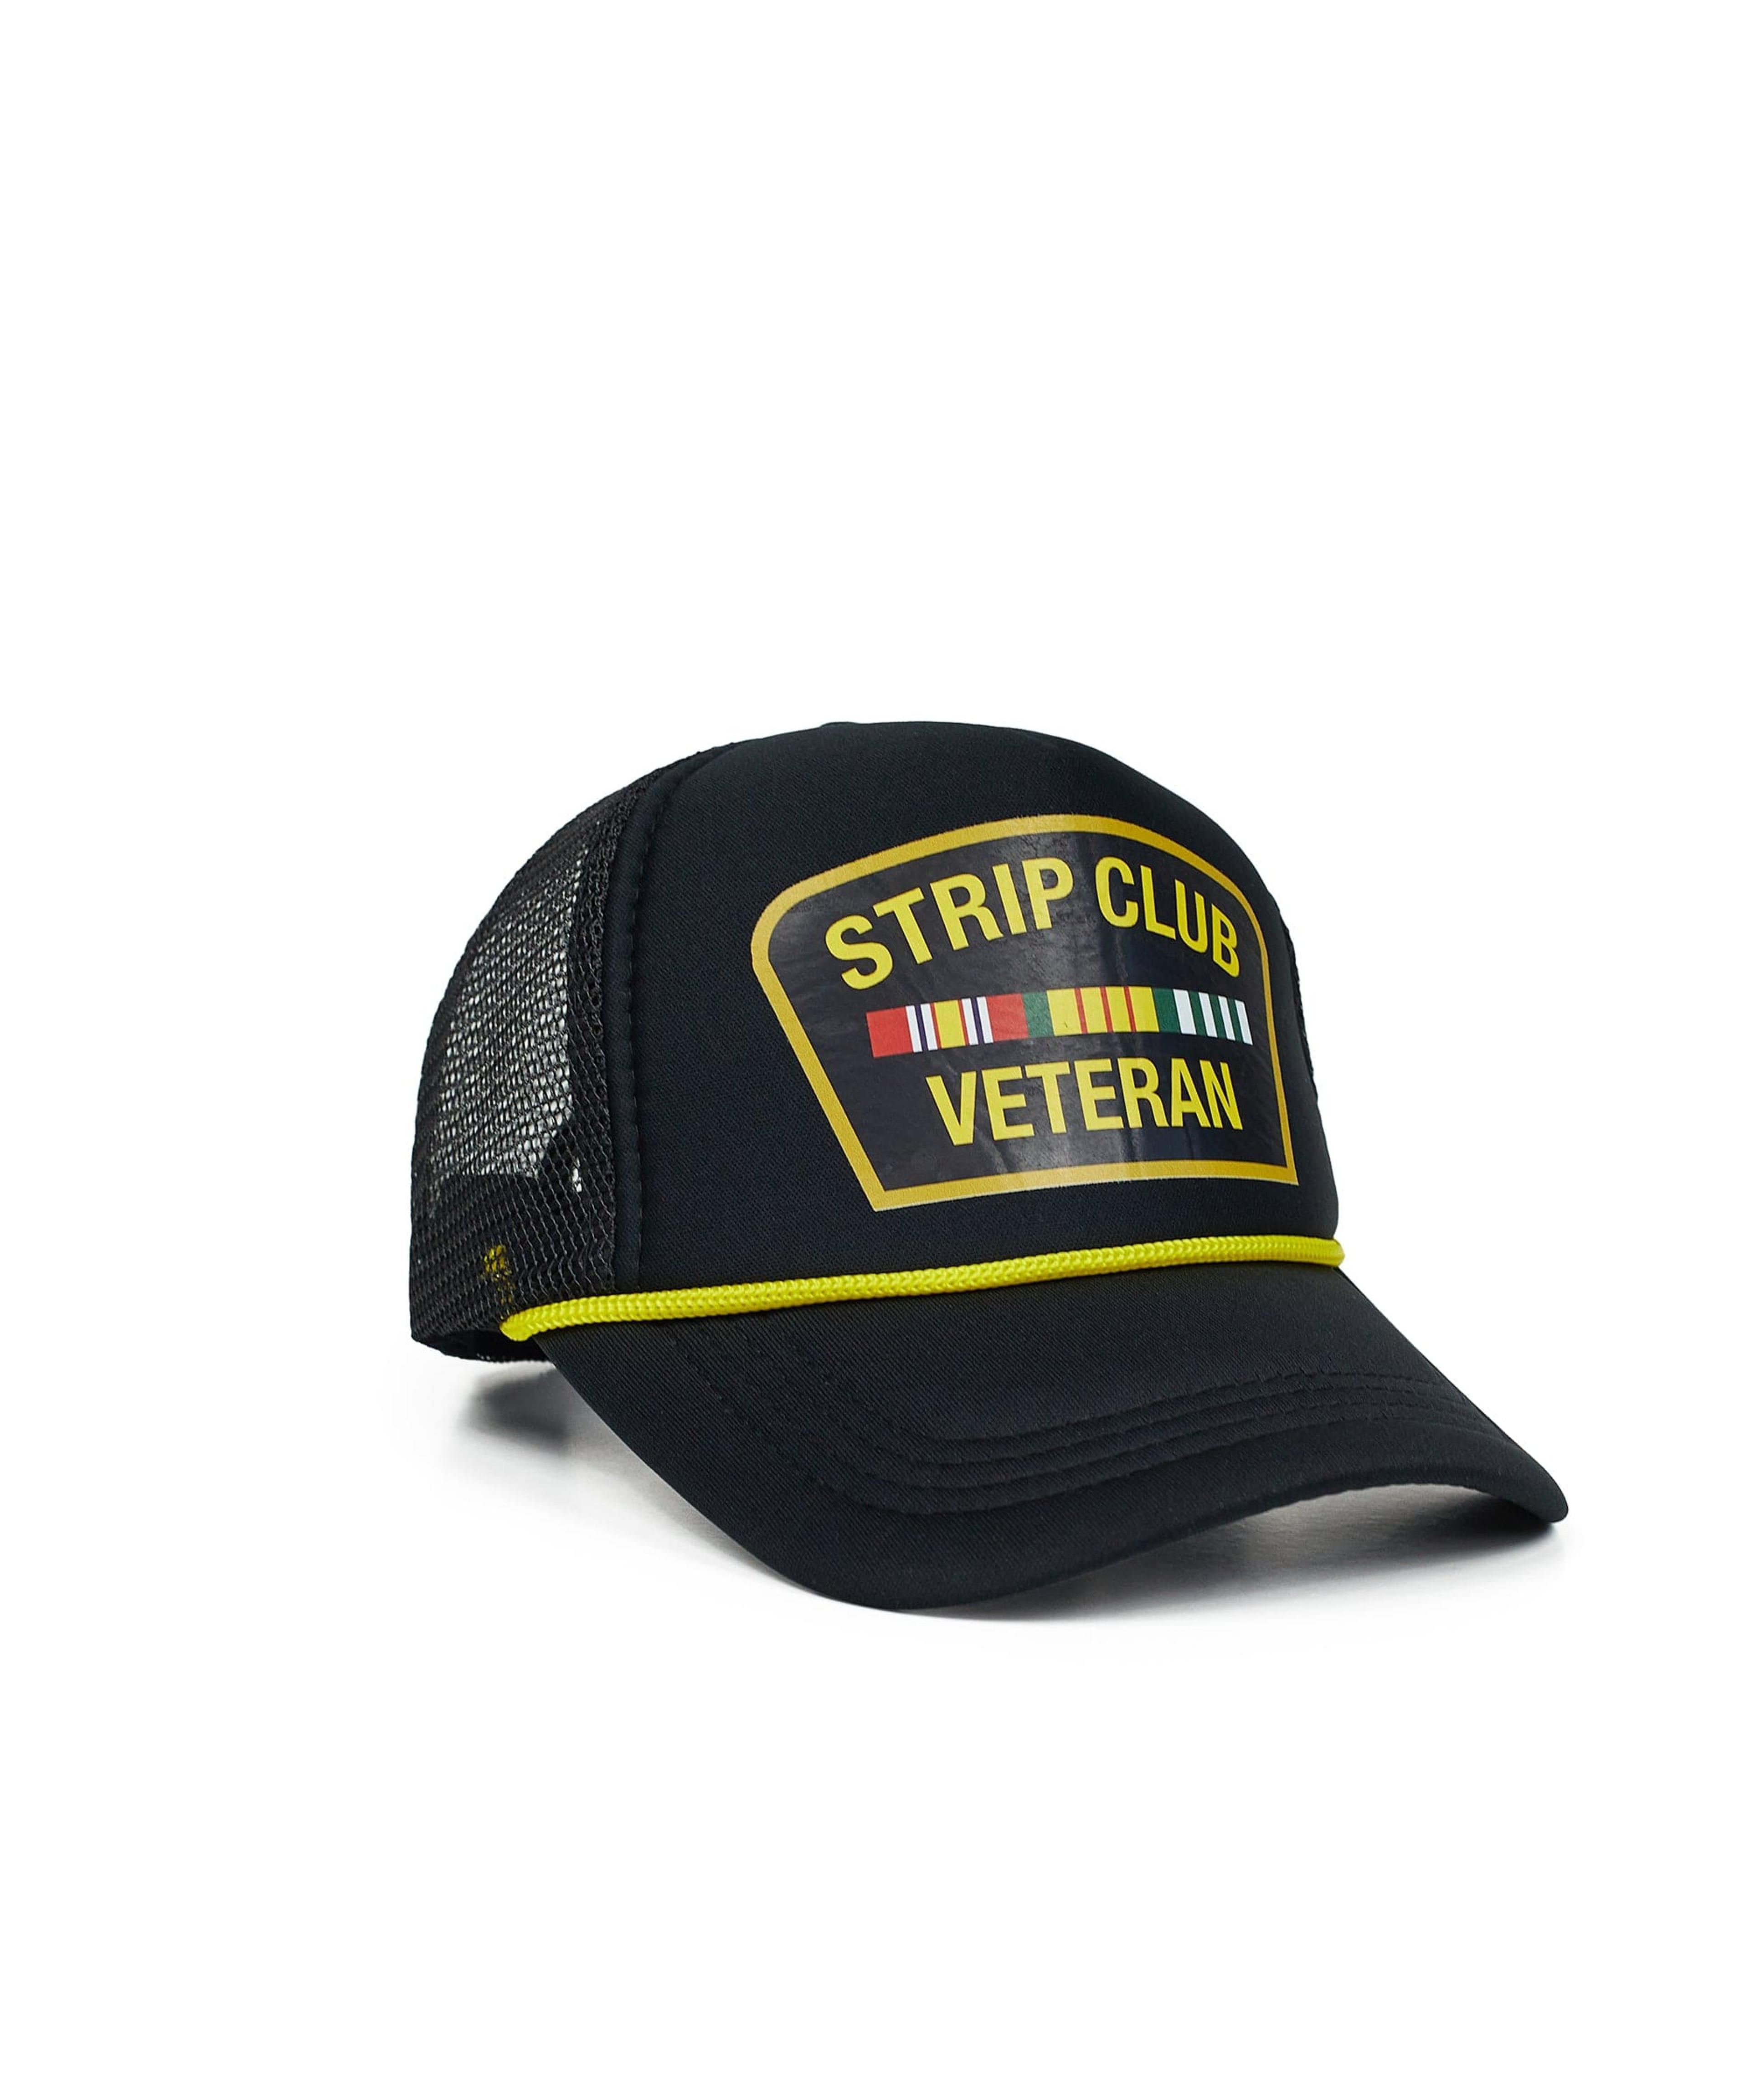 Alternate View 1 of Strip Club Veteran Trucker Hat